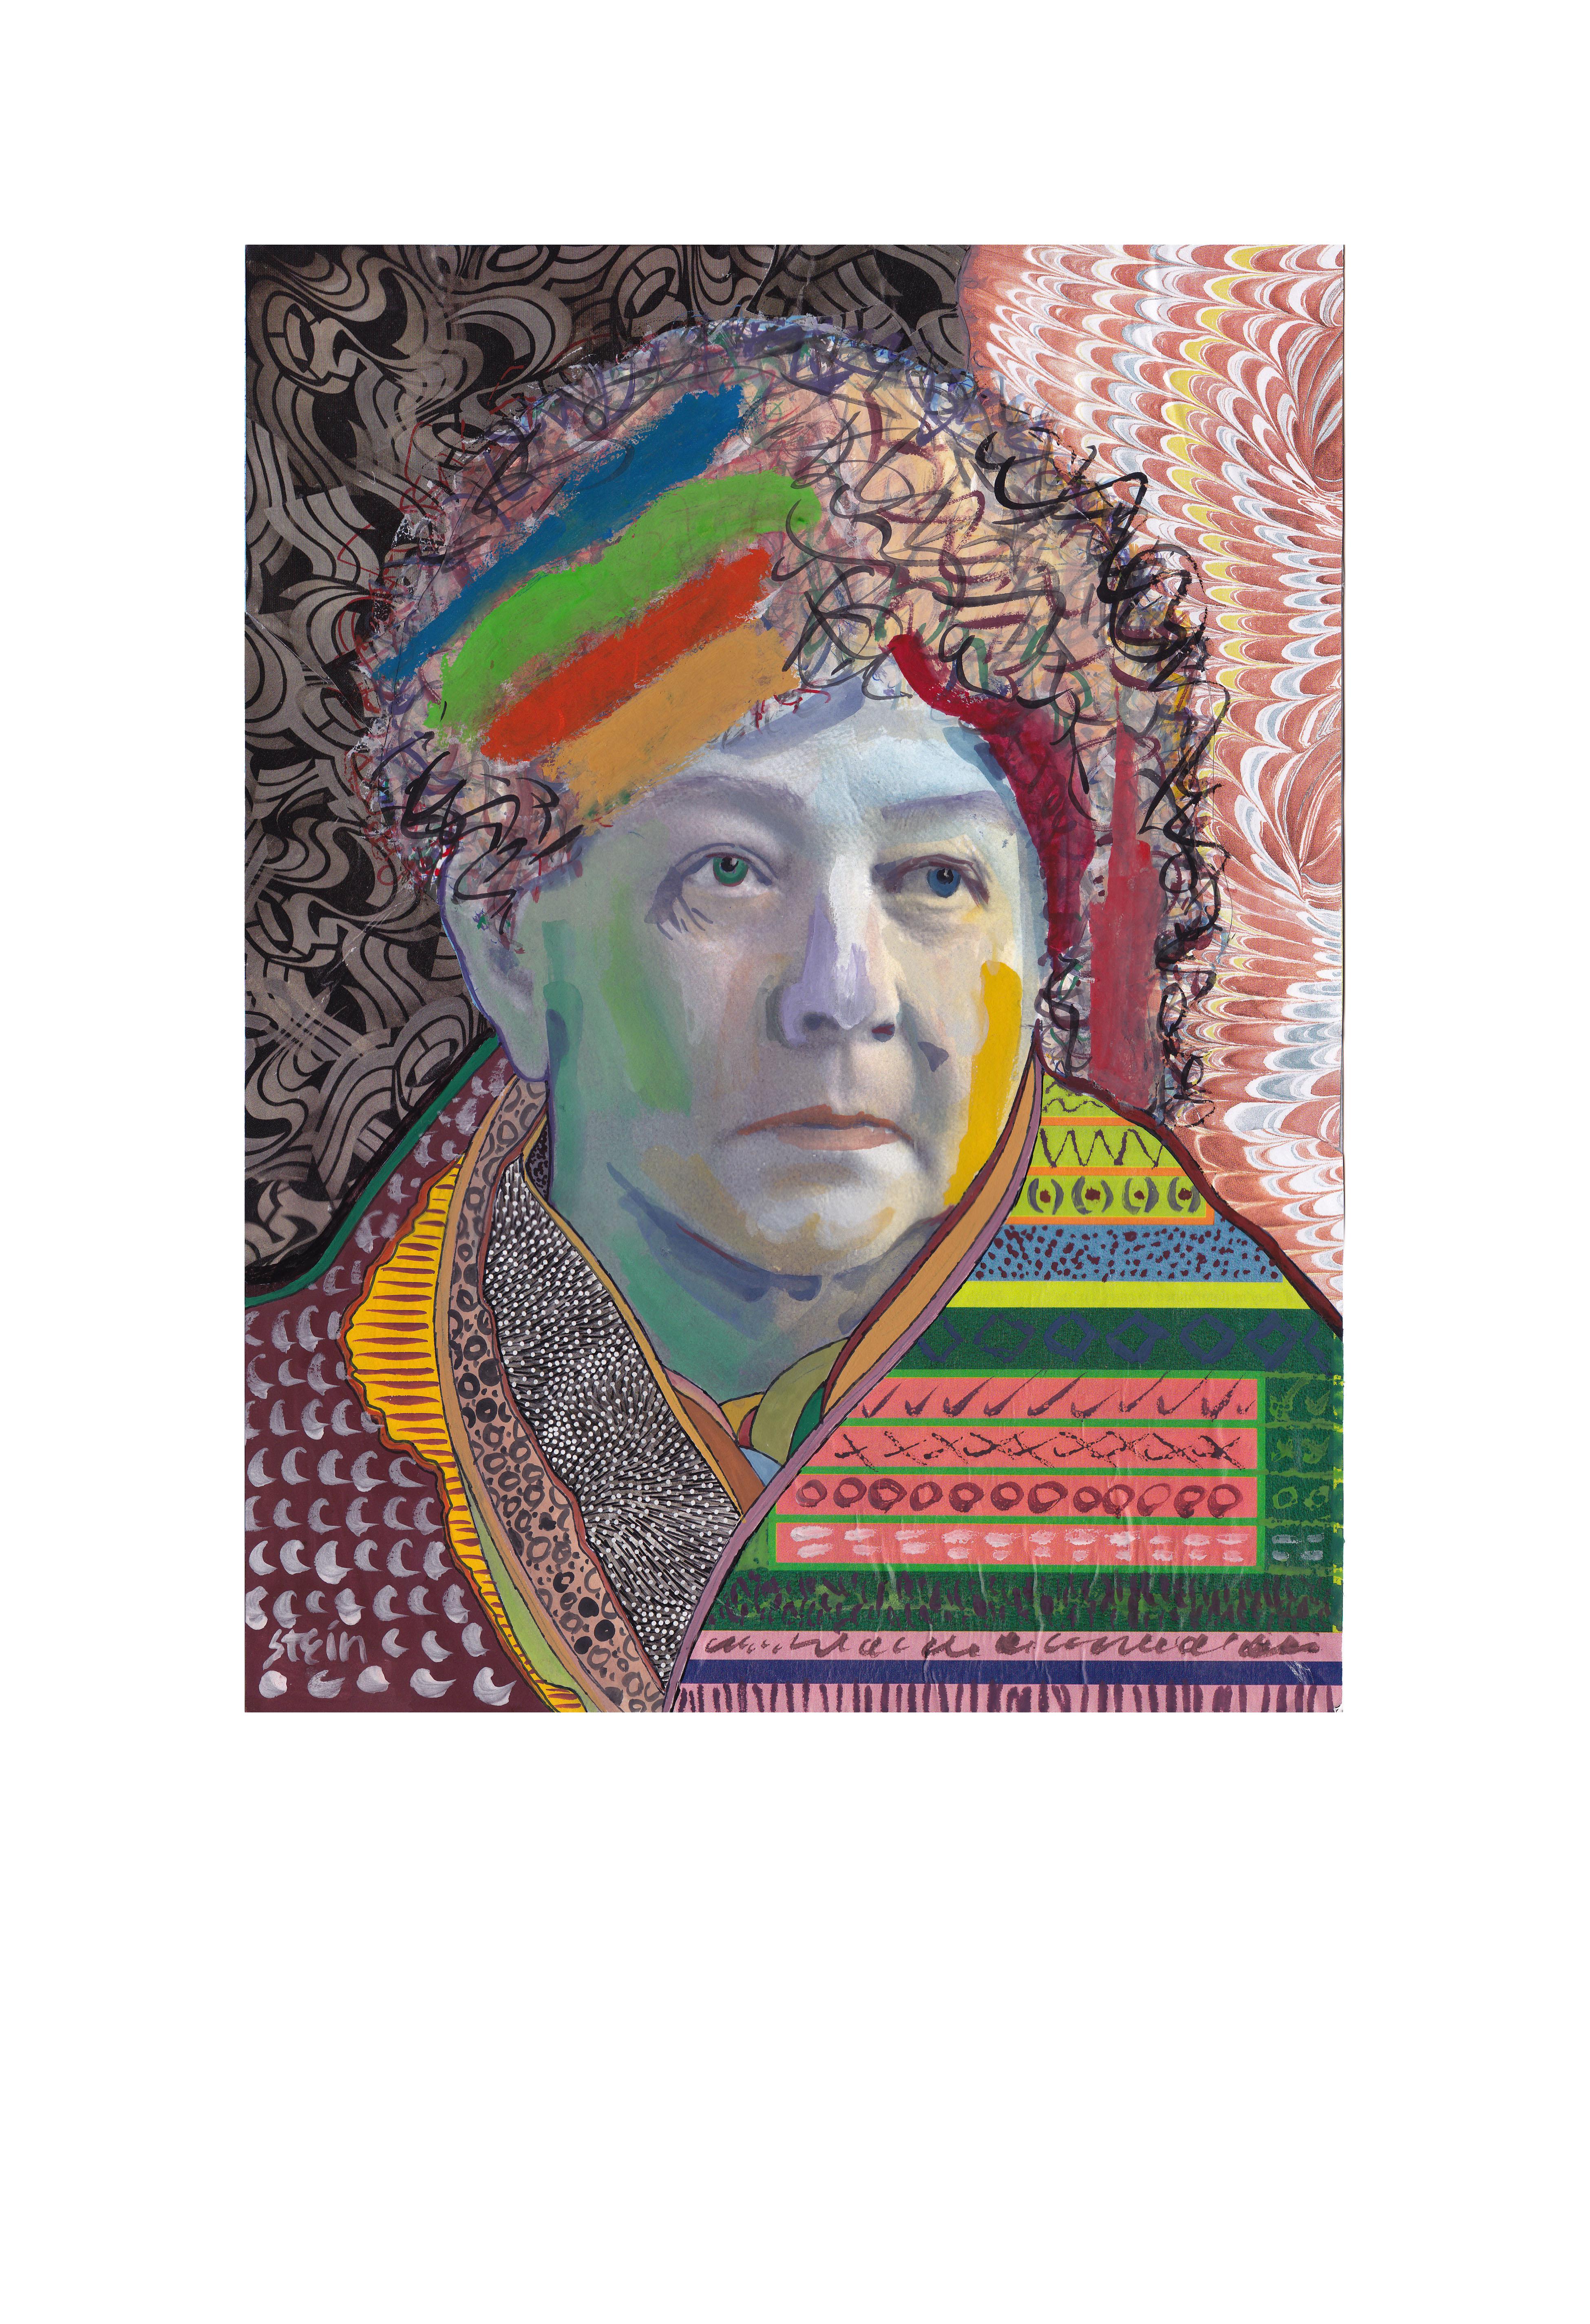 Linda Stein Portrait Print - Signed Limited Edition Feminist Contemporary Print - Elizabeth Cady Stanton 800 